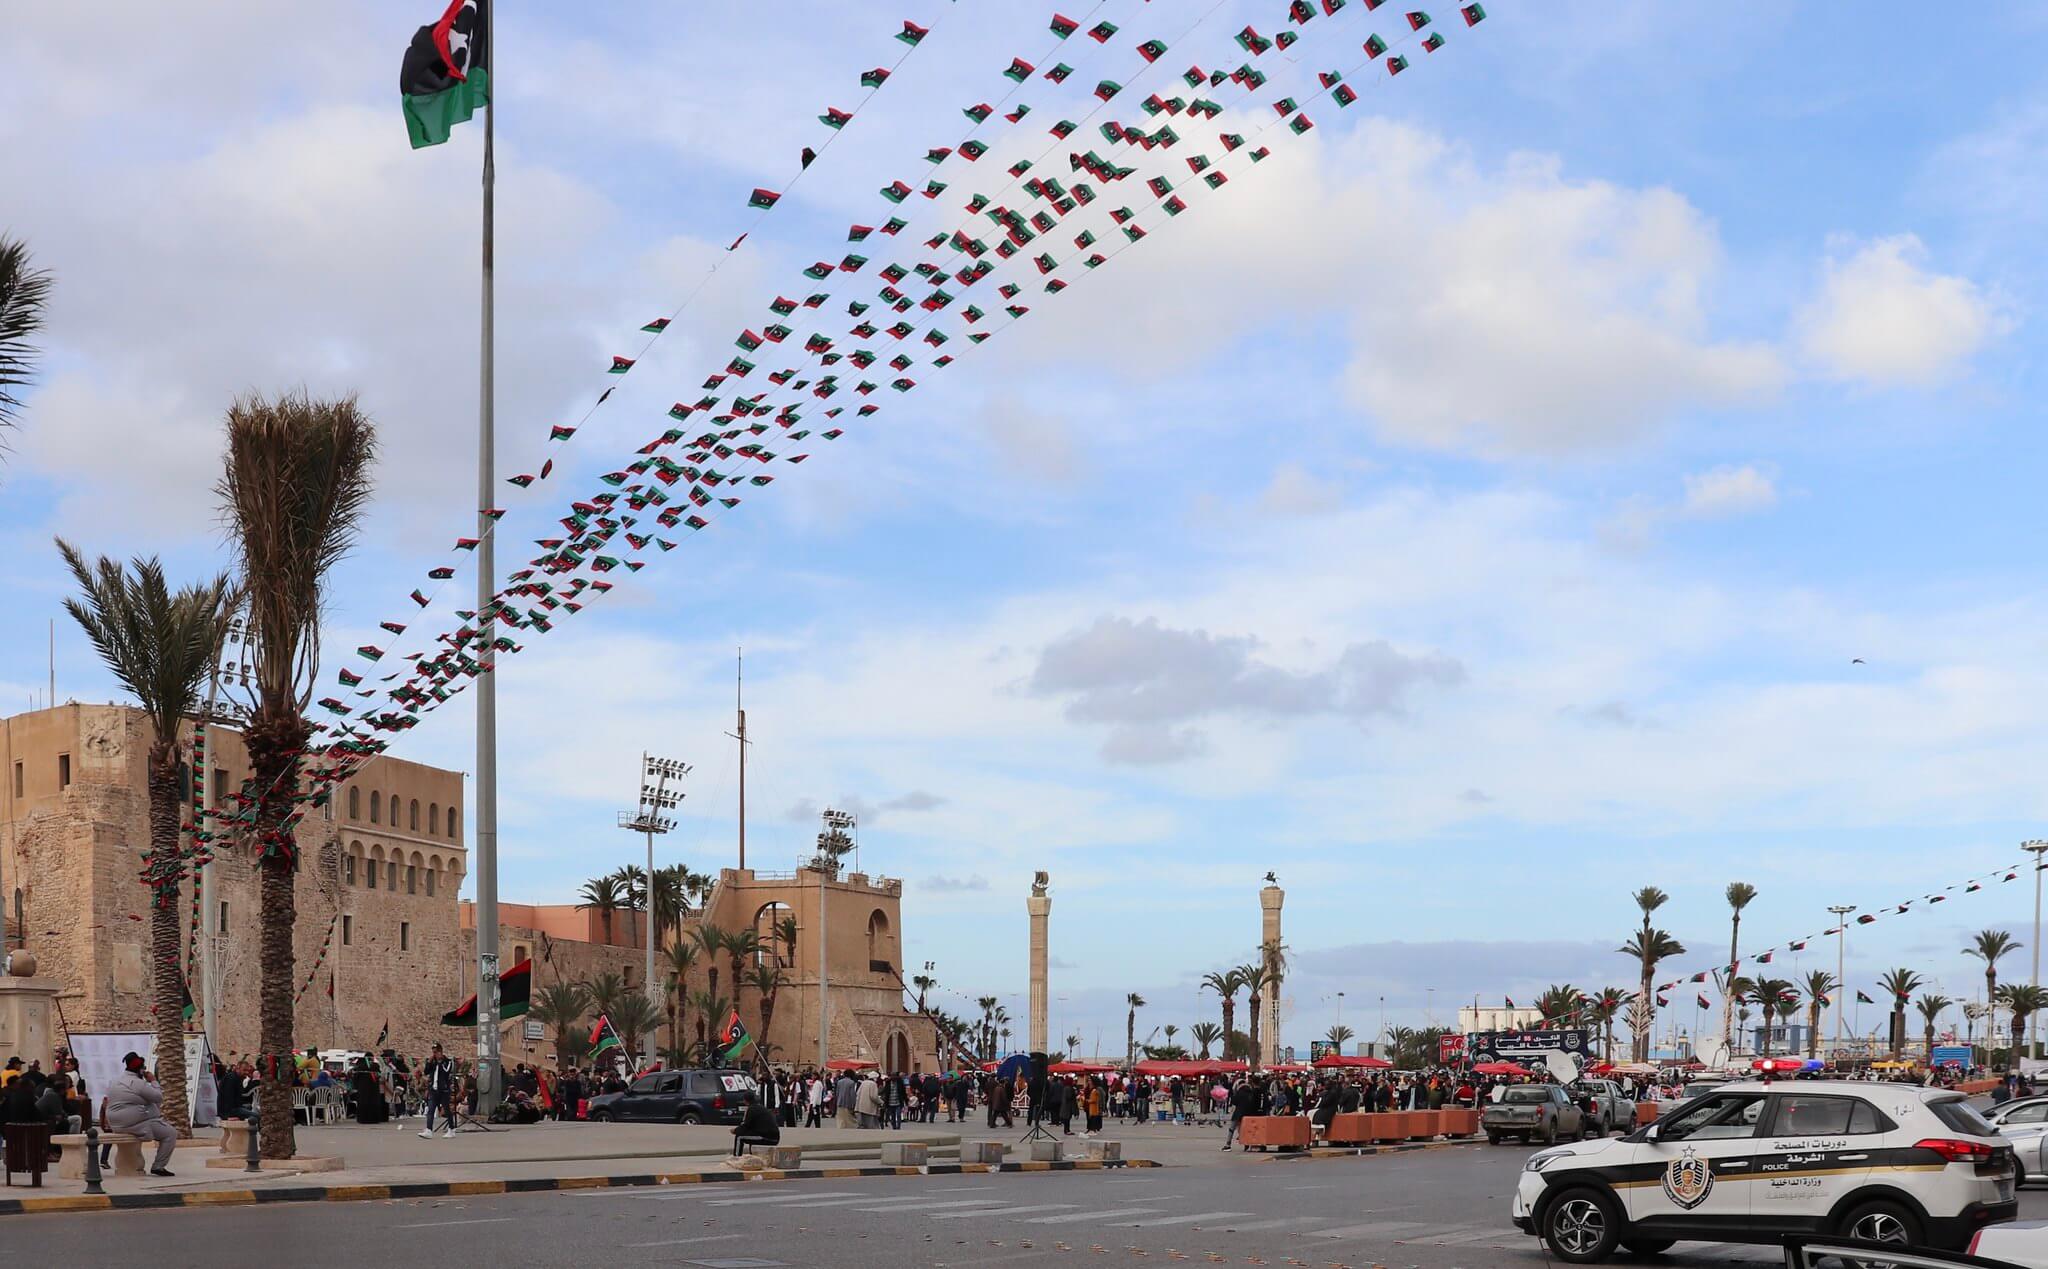 Tripoli main square in February 2020. Ziad Fhema